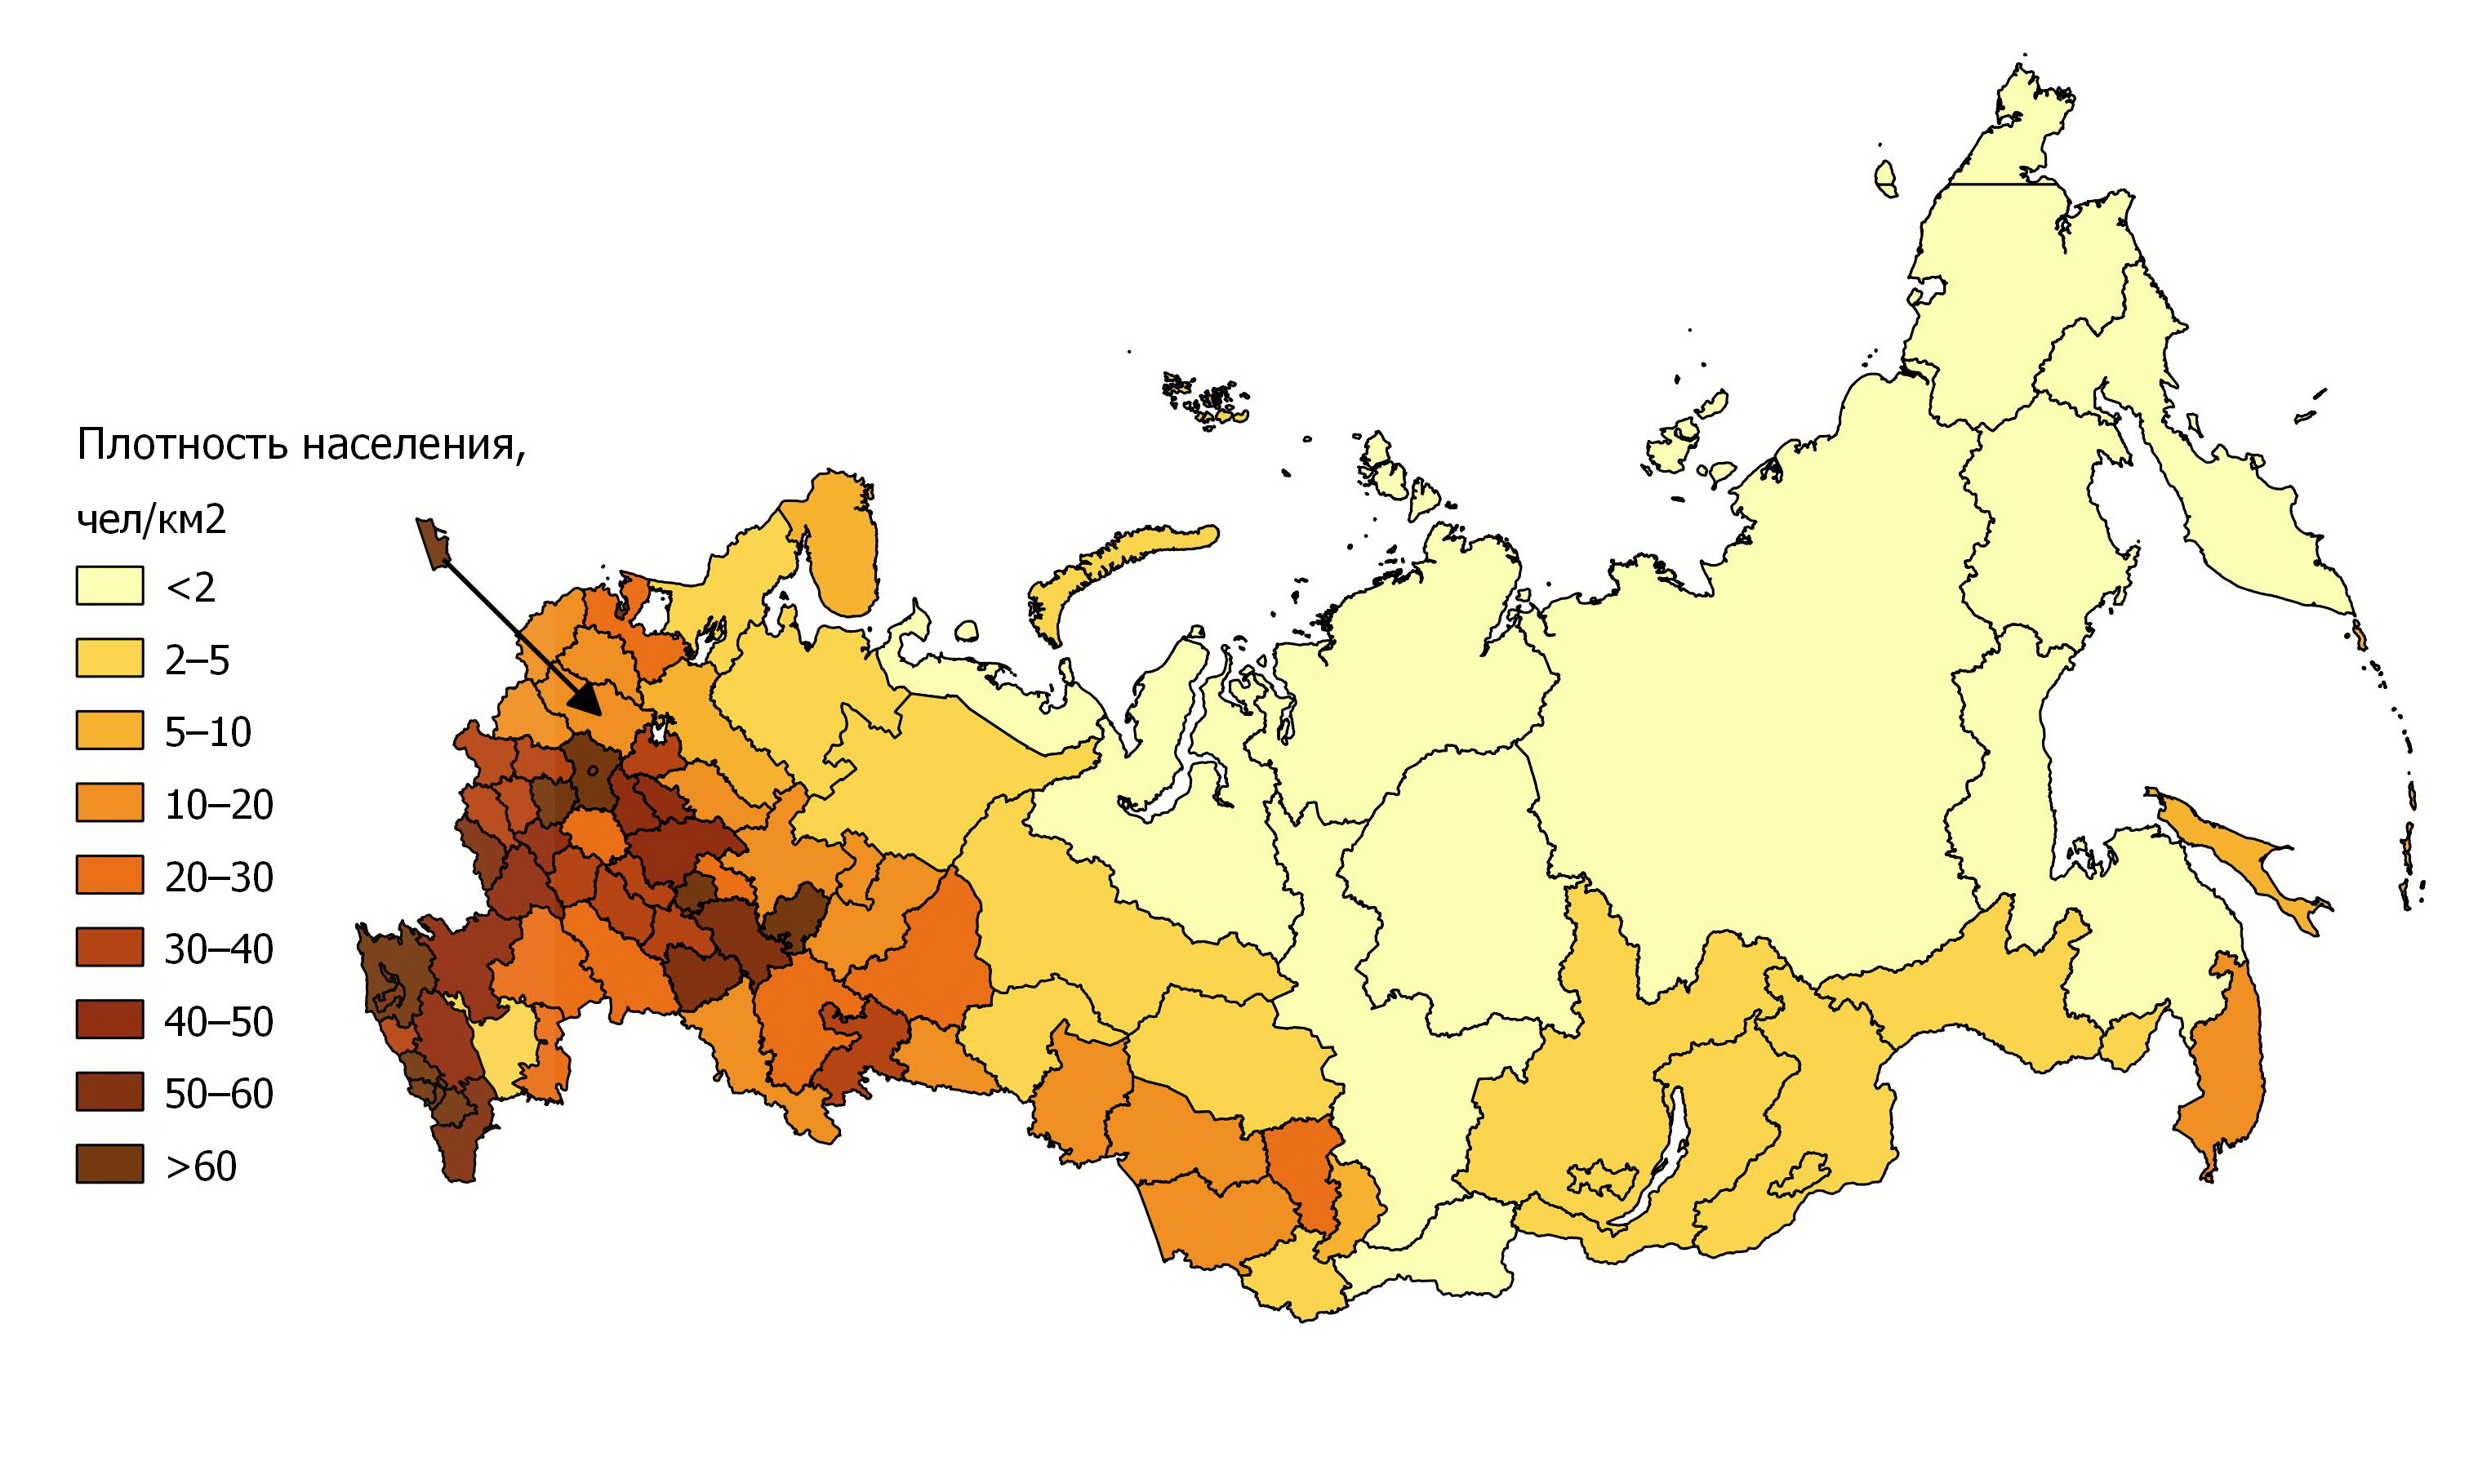 Russia's_population_density_by_region.jpg